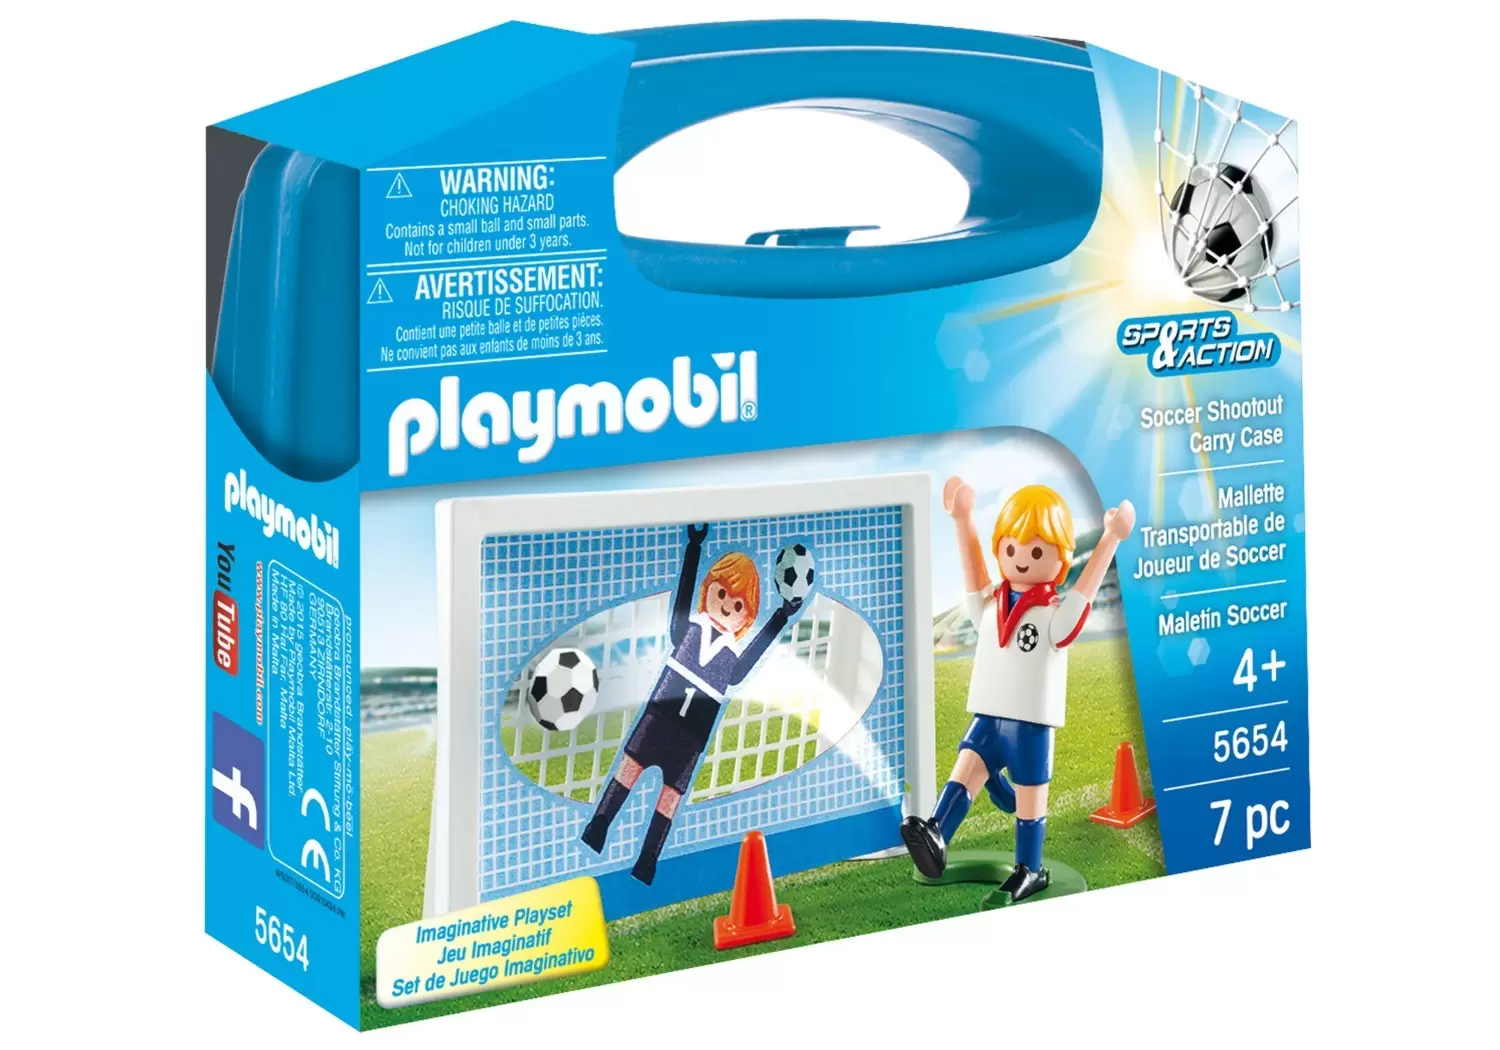 Playmobil Football - Soccer Shootout Carry Case